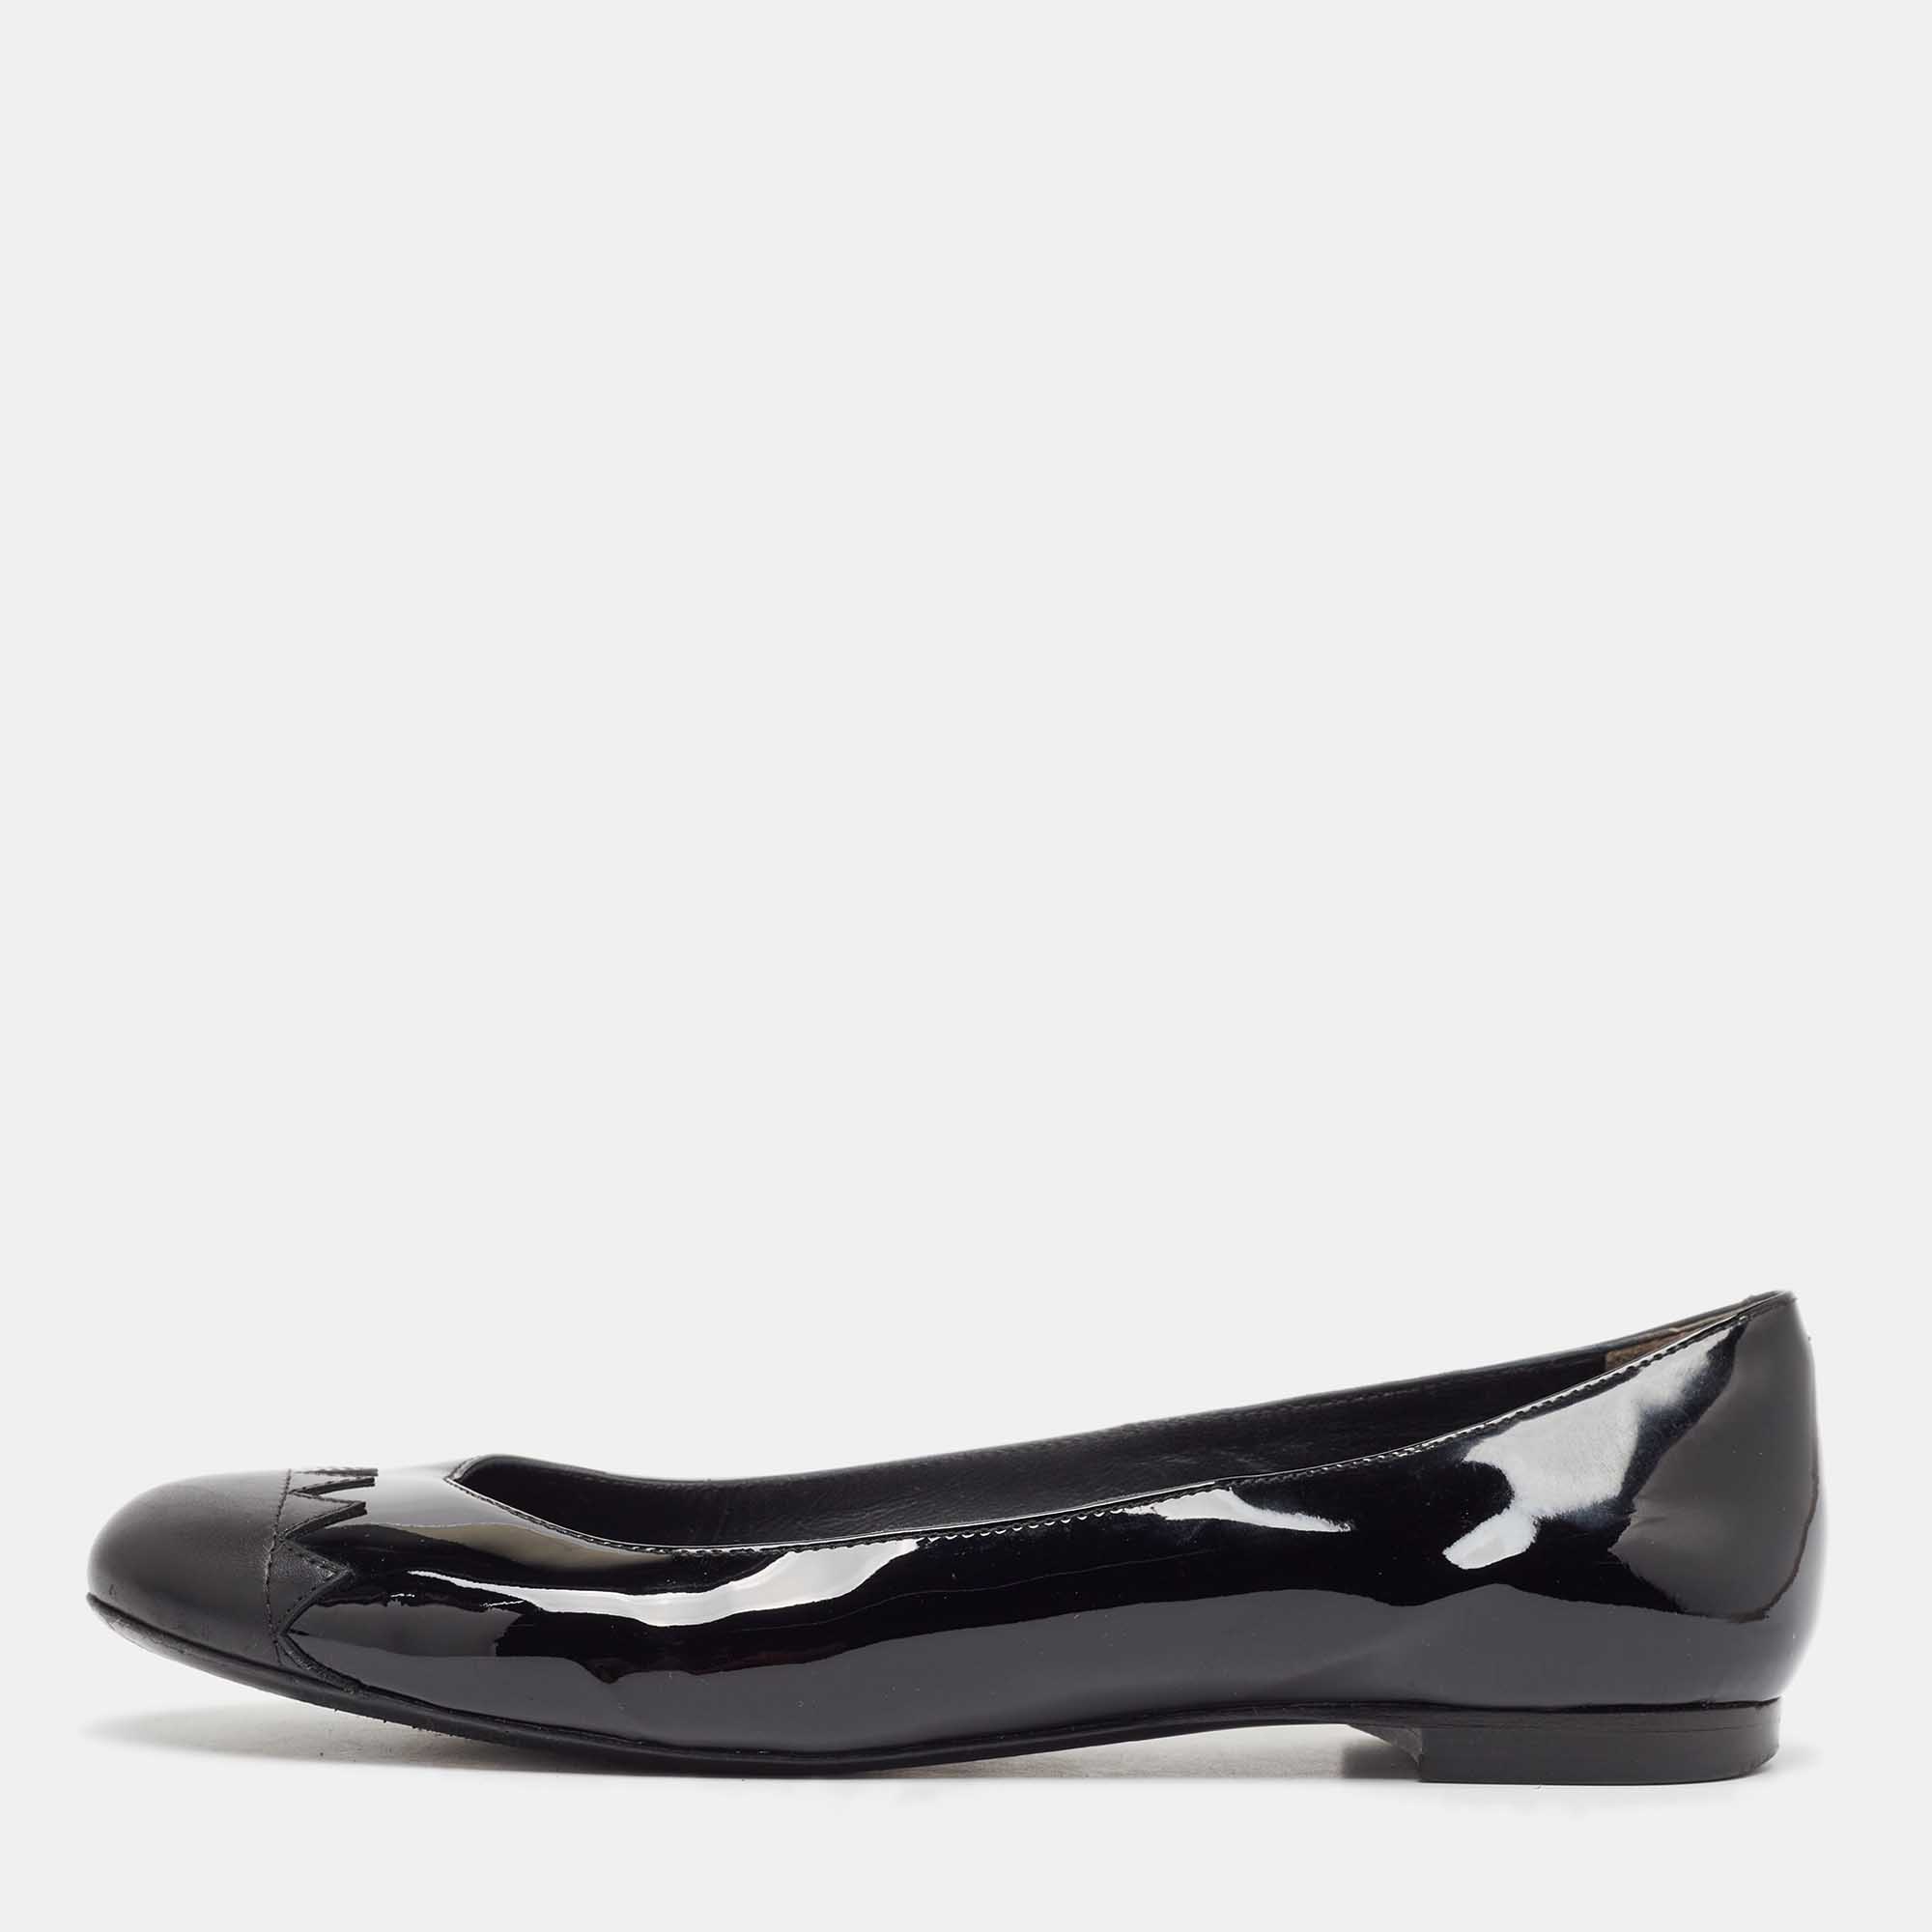 Fendi black patent leather cap toe ballet flats size 37.5